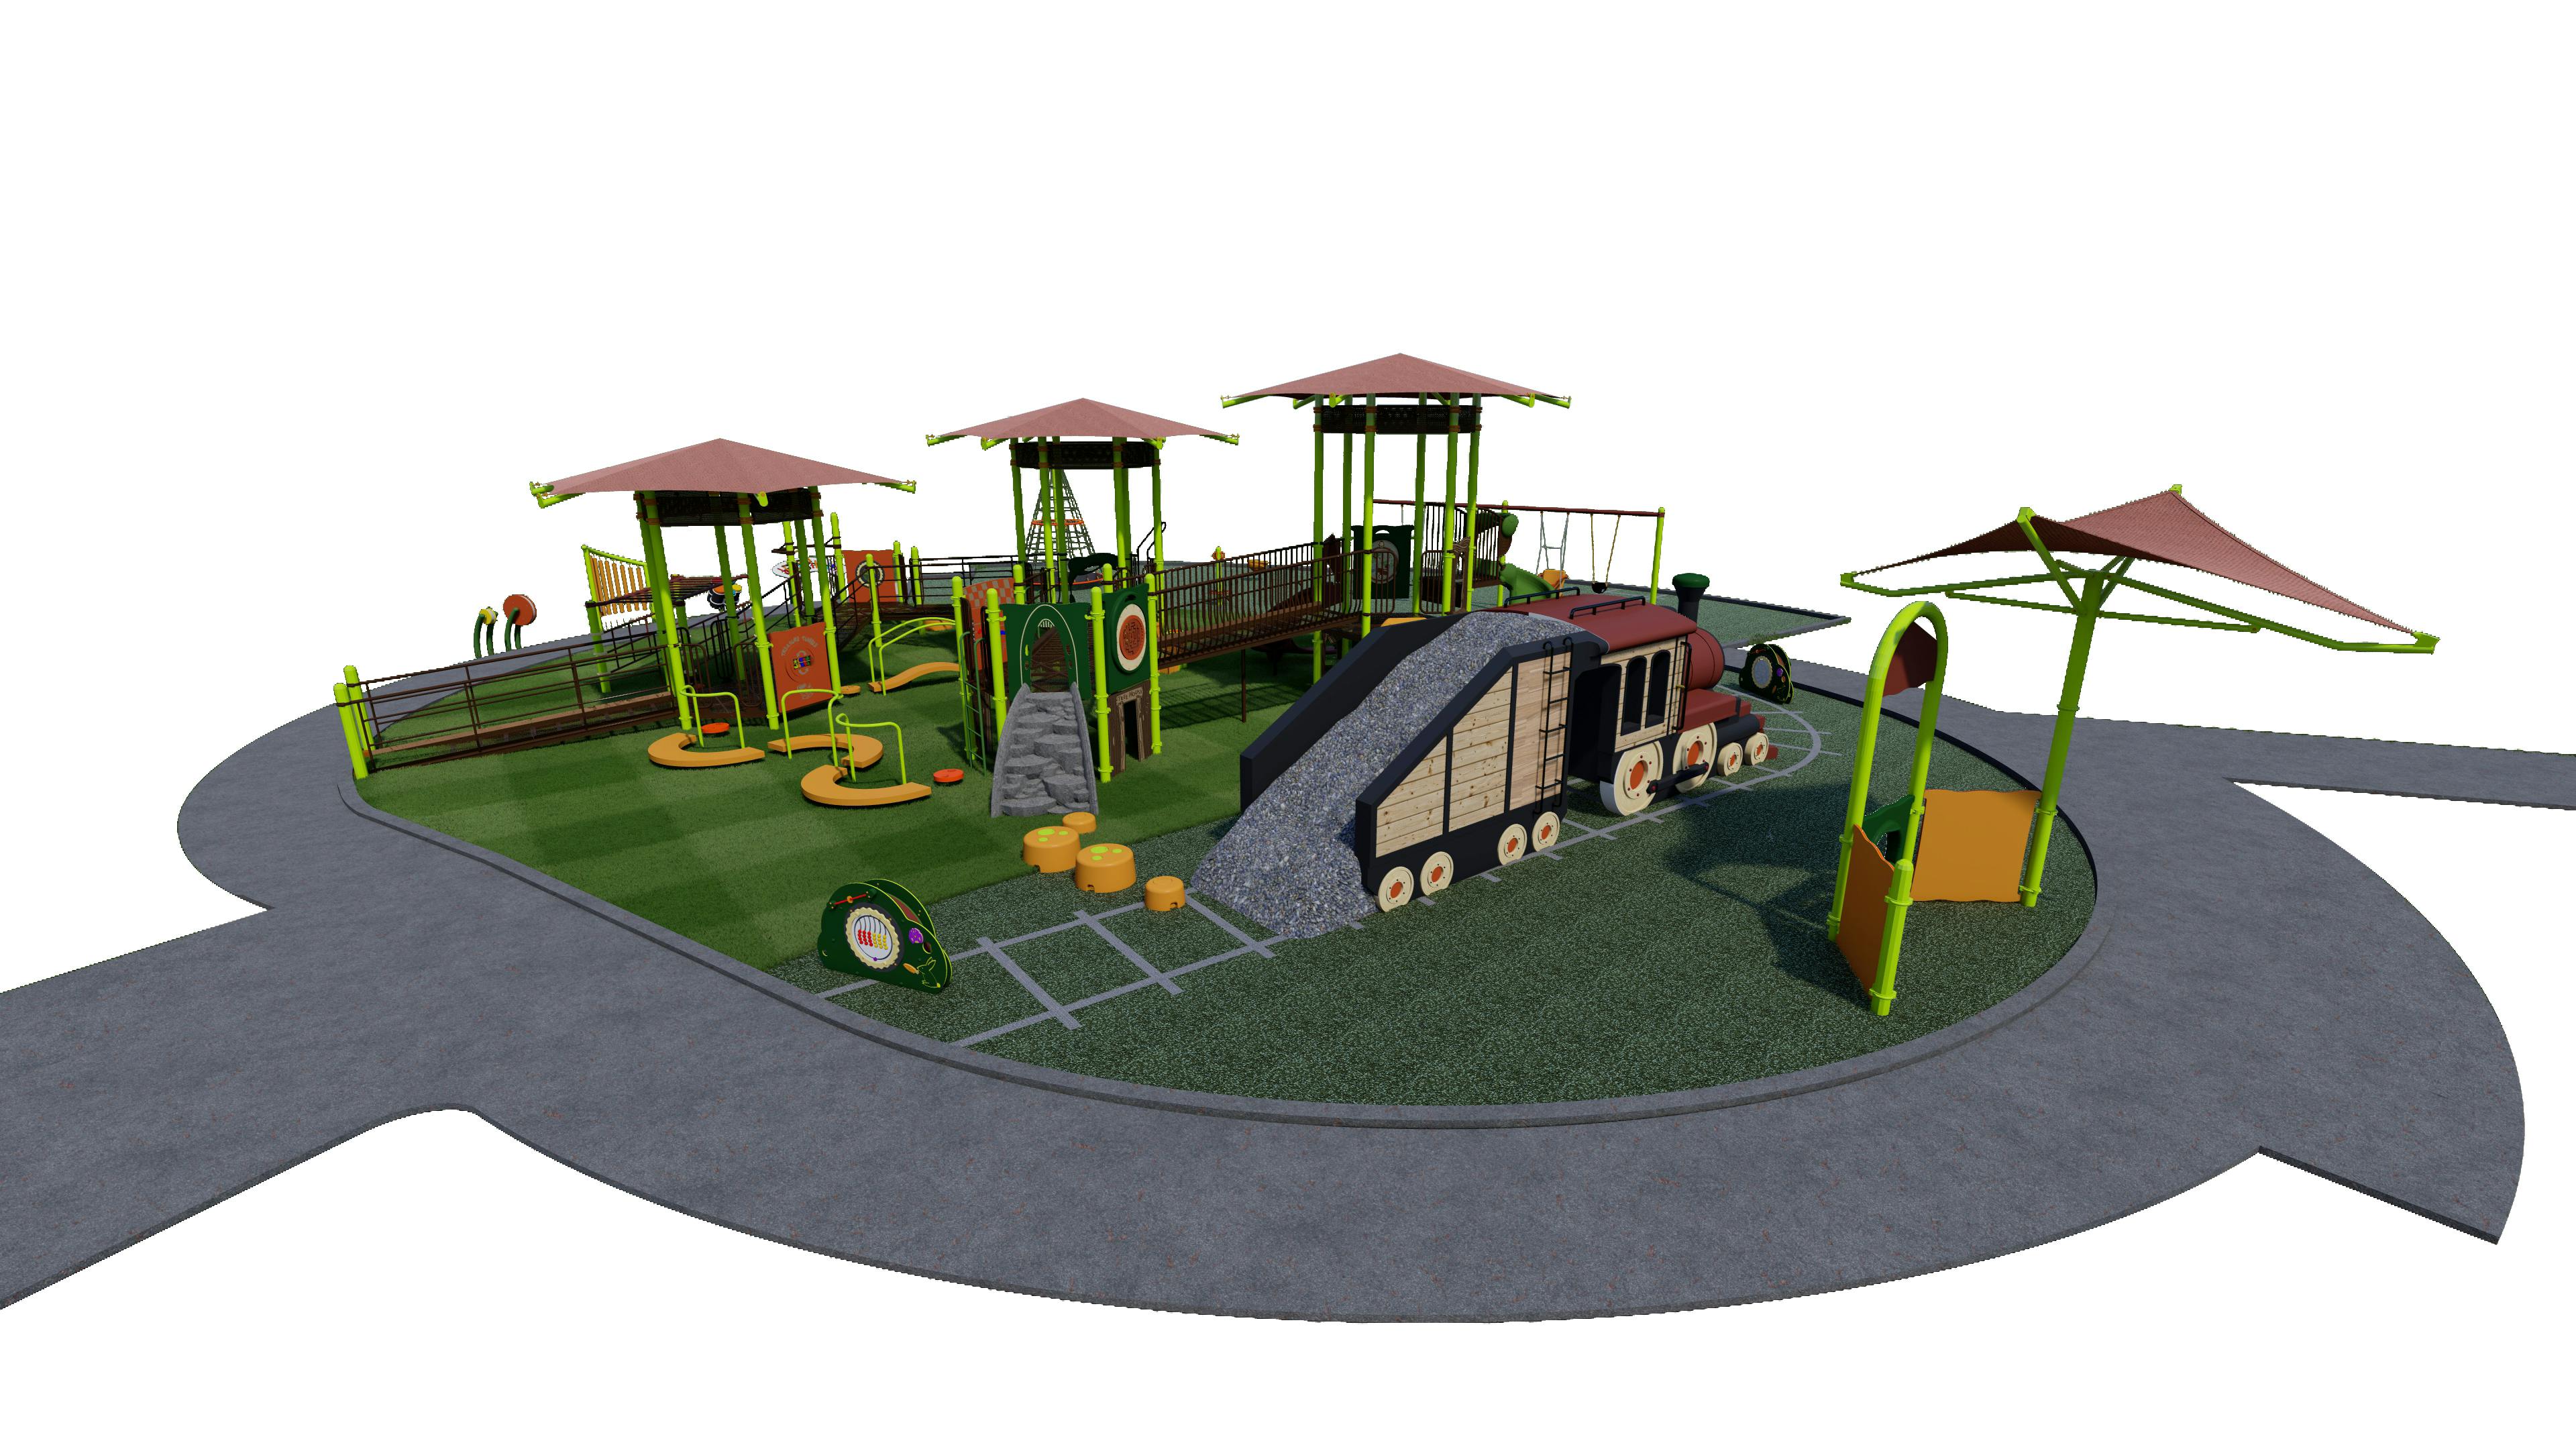 Preferred Playground Design View 1